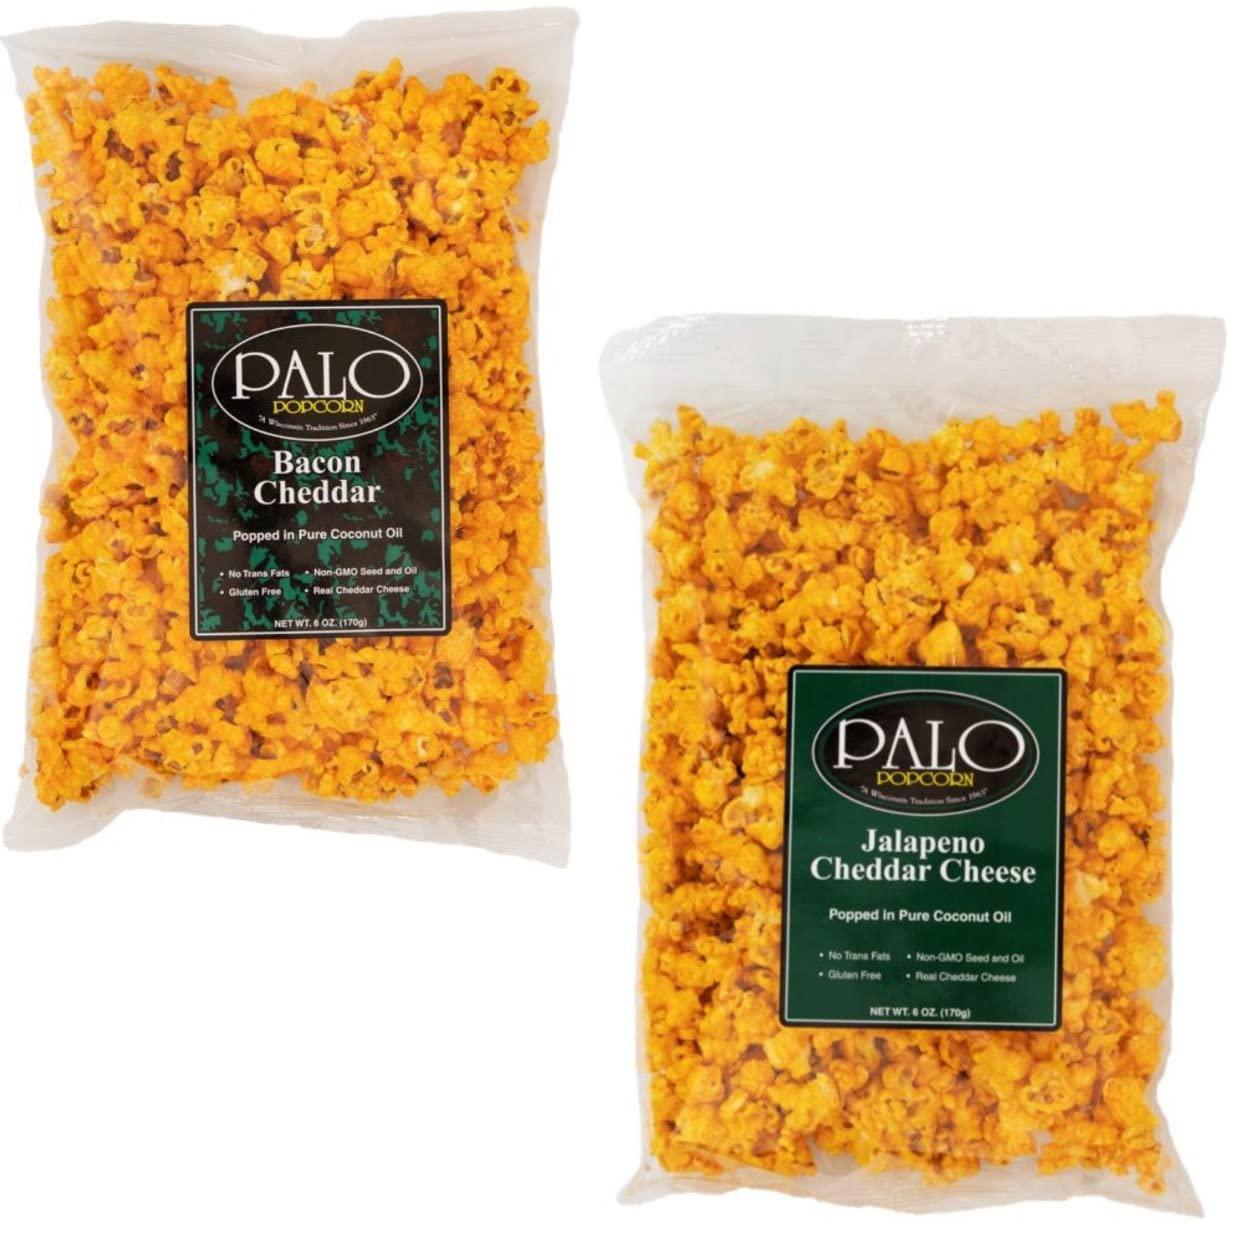 Chollo Pack Lékué! Palomitero Popcorn y Ensaladera Salad Shaker